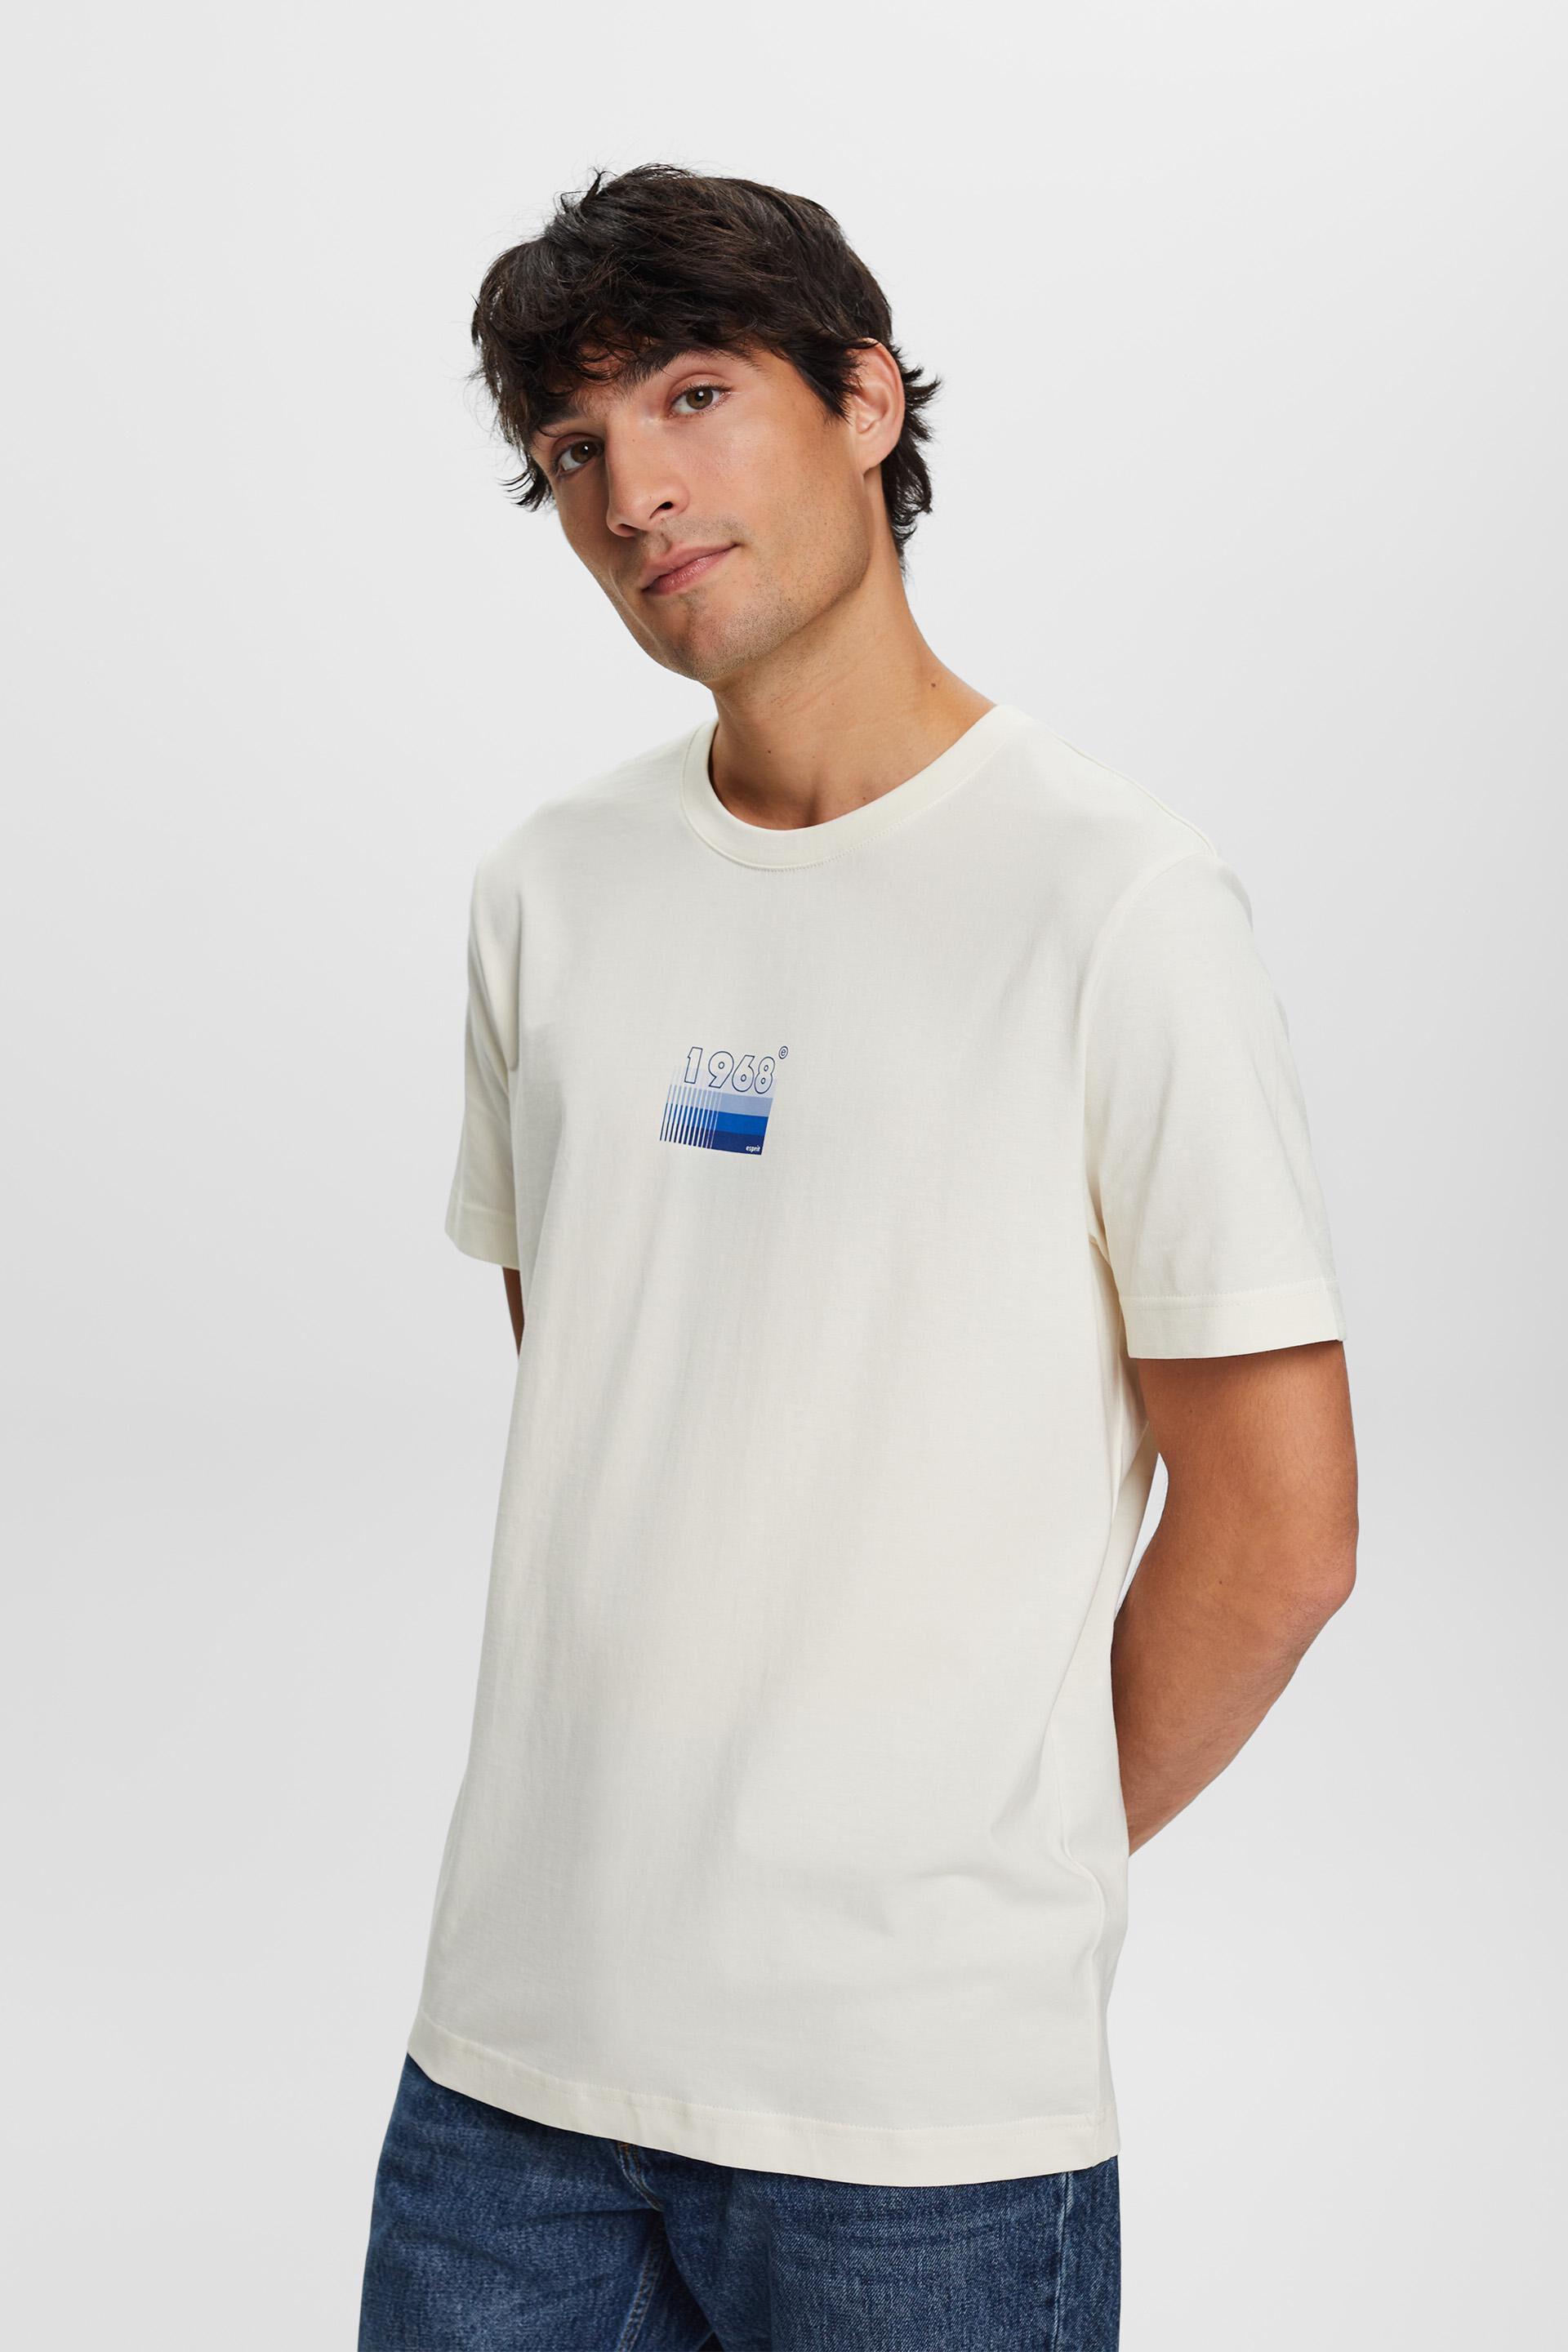 Esprit T-shirt Jersey 100% print, with cotton